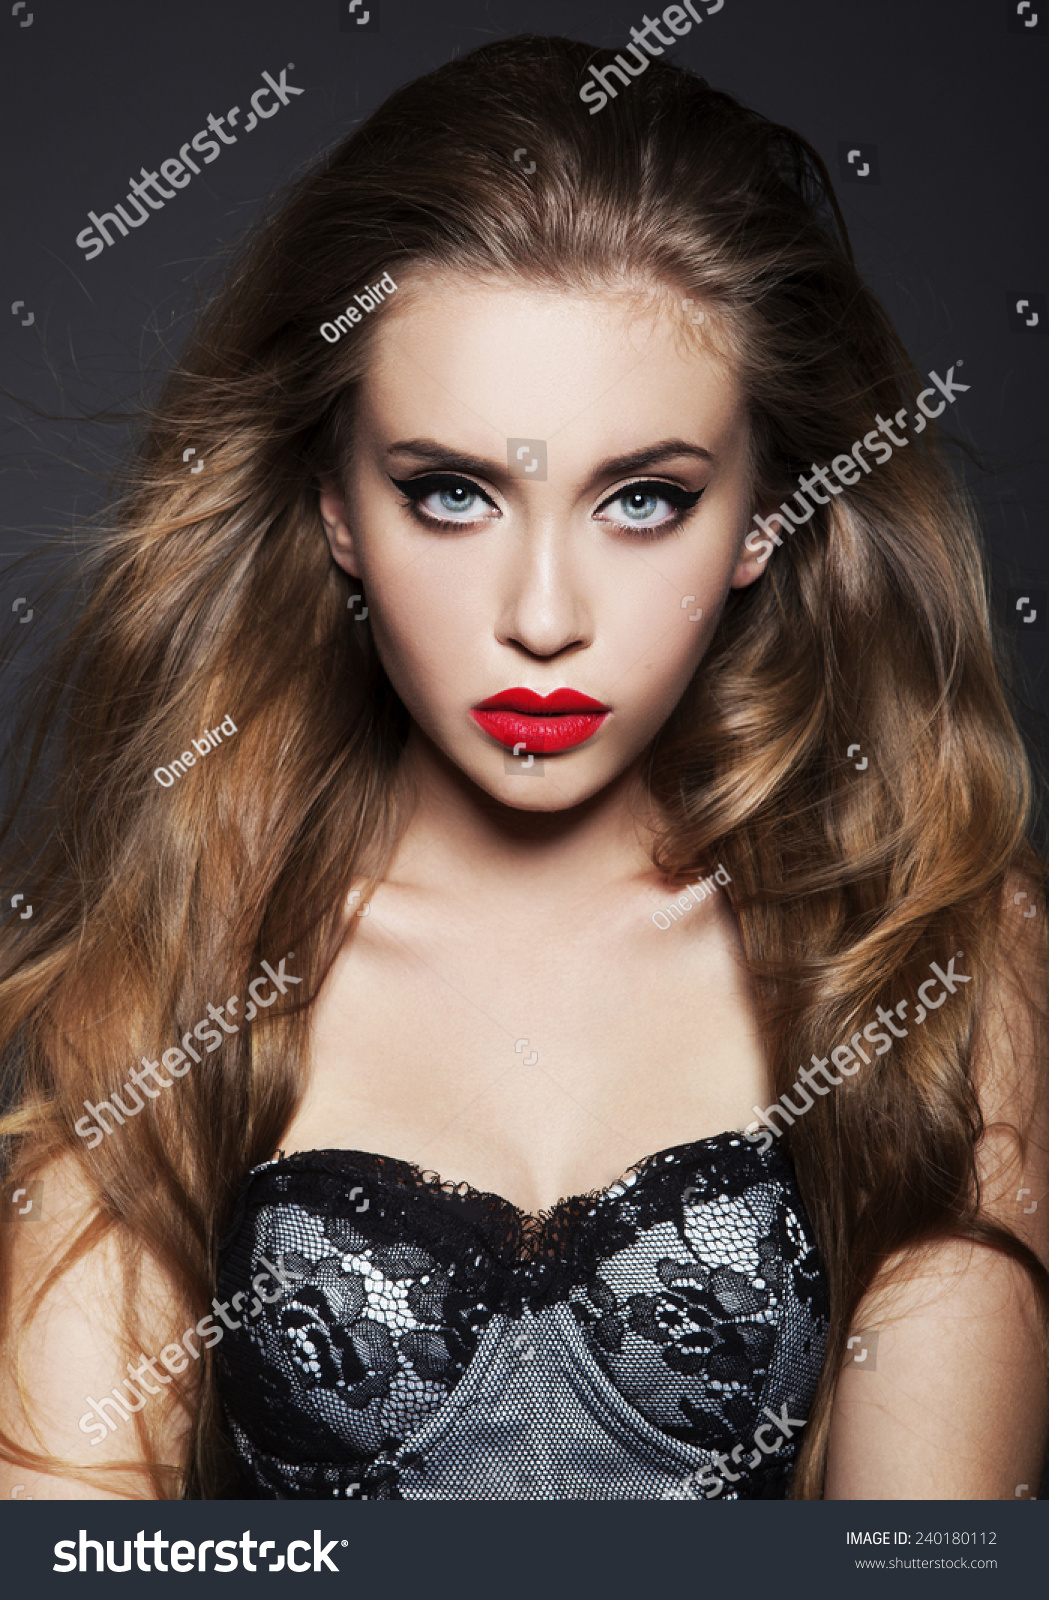 Sexy Blonde Hair Woman Black Bra Stock Photo Edit Now 240180112